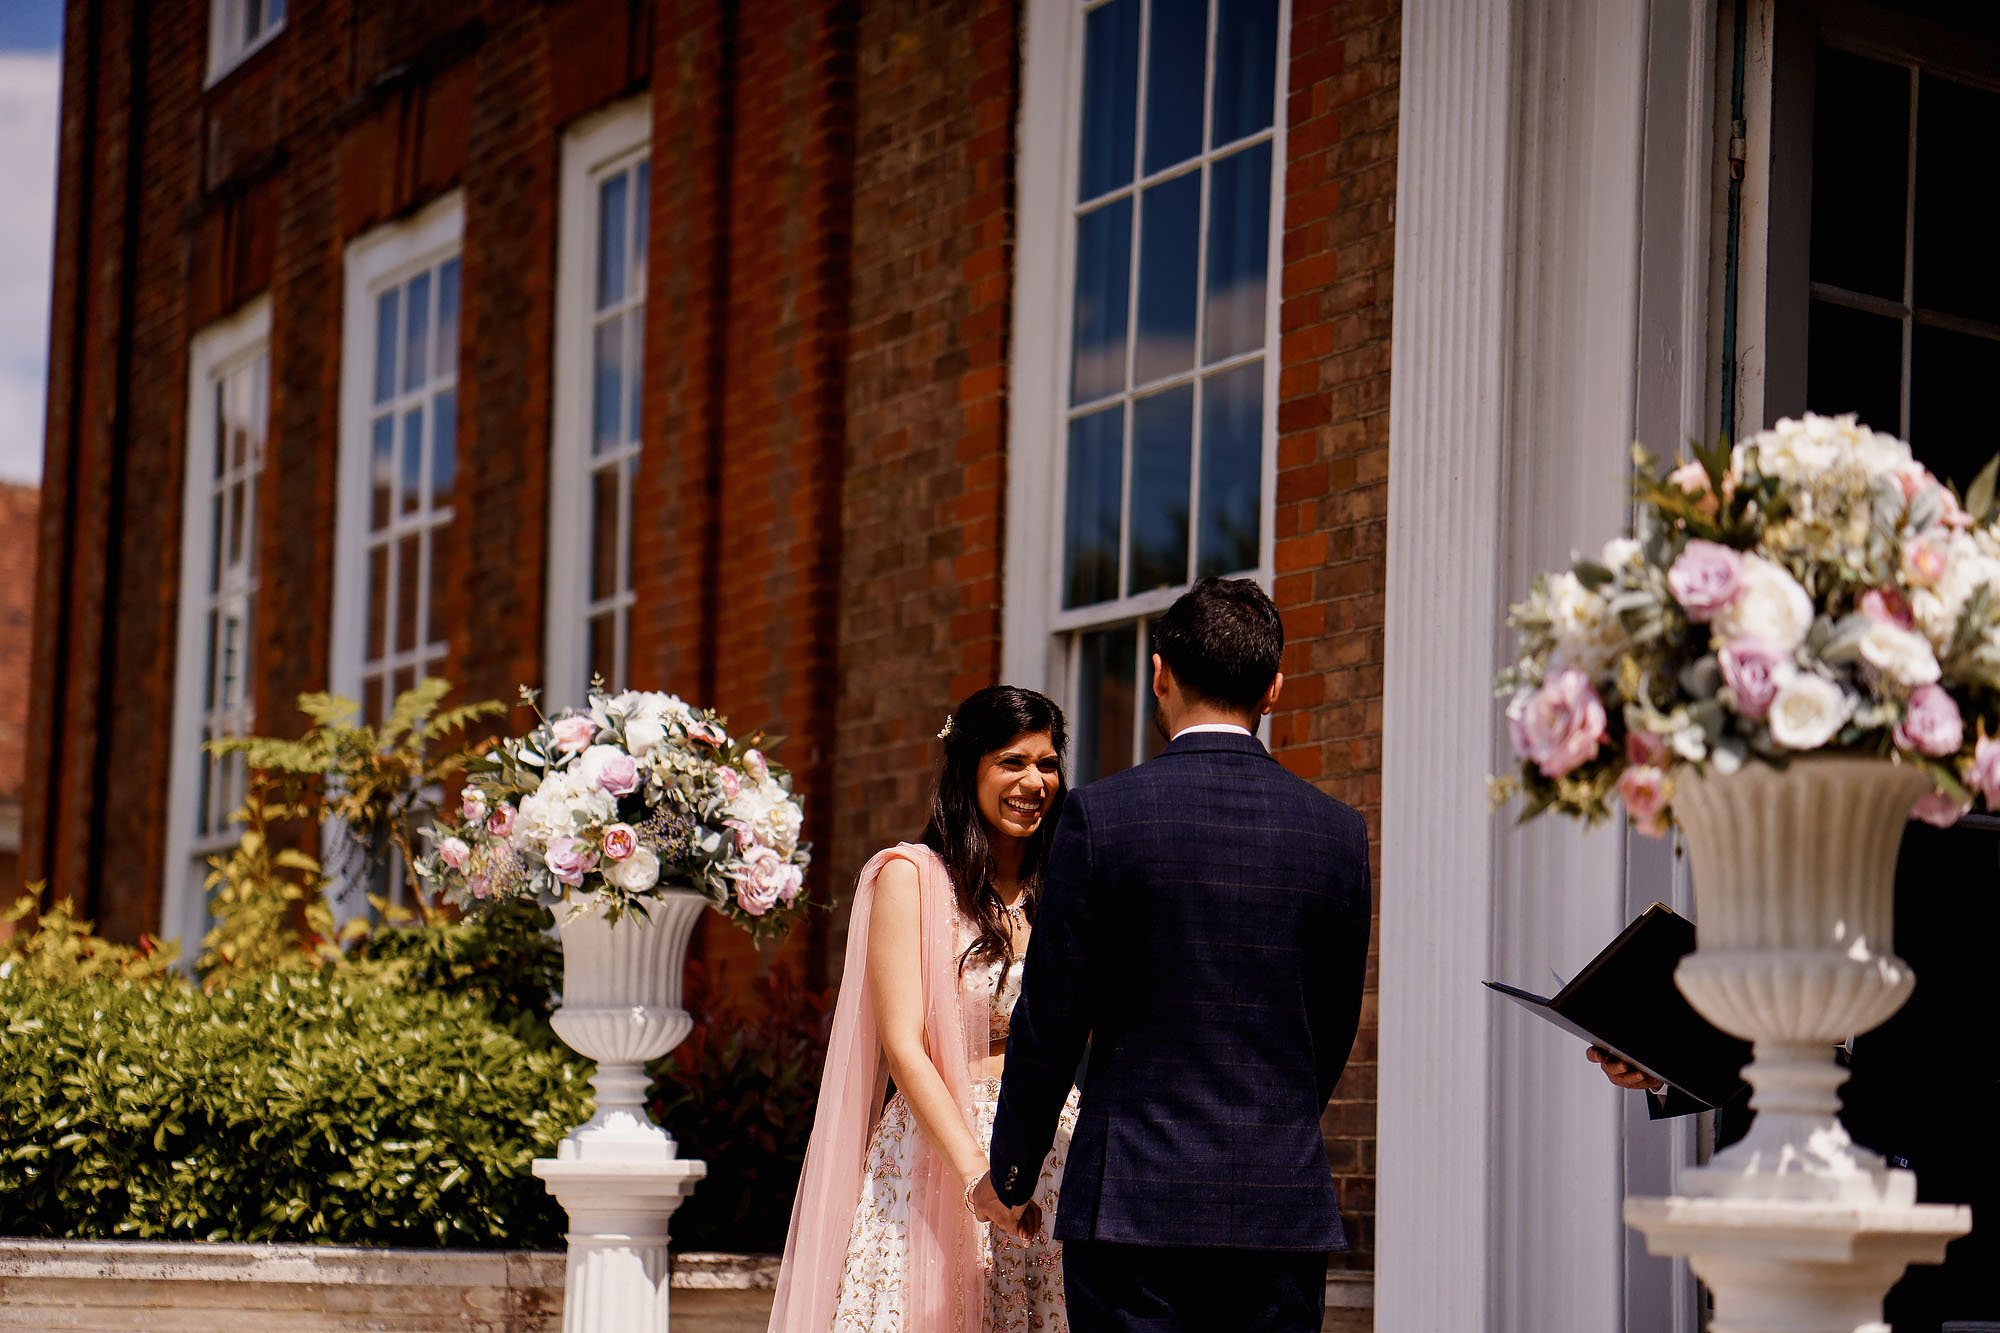 Bradbourne house kent wedding photography by arj photography®